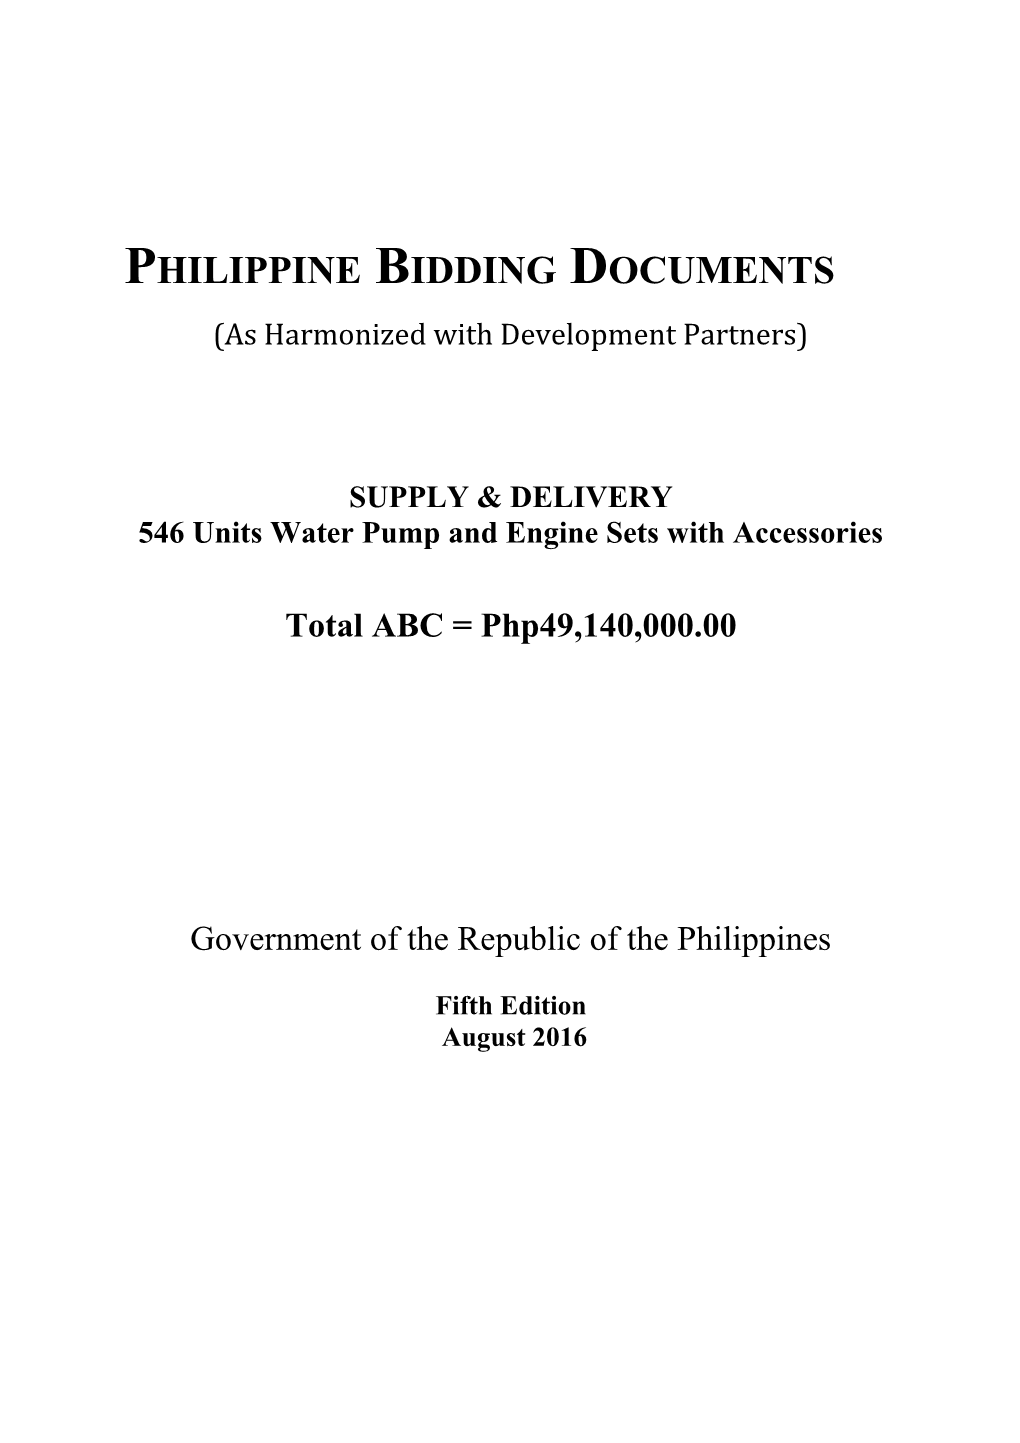 Philippine Bidding Documents s5